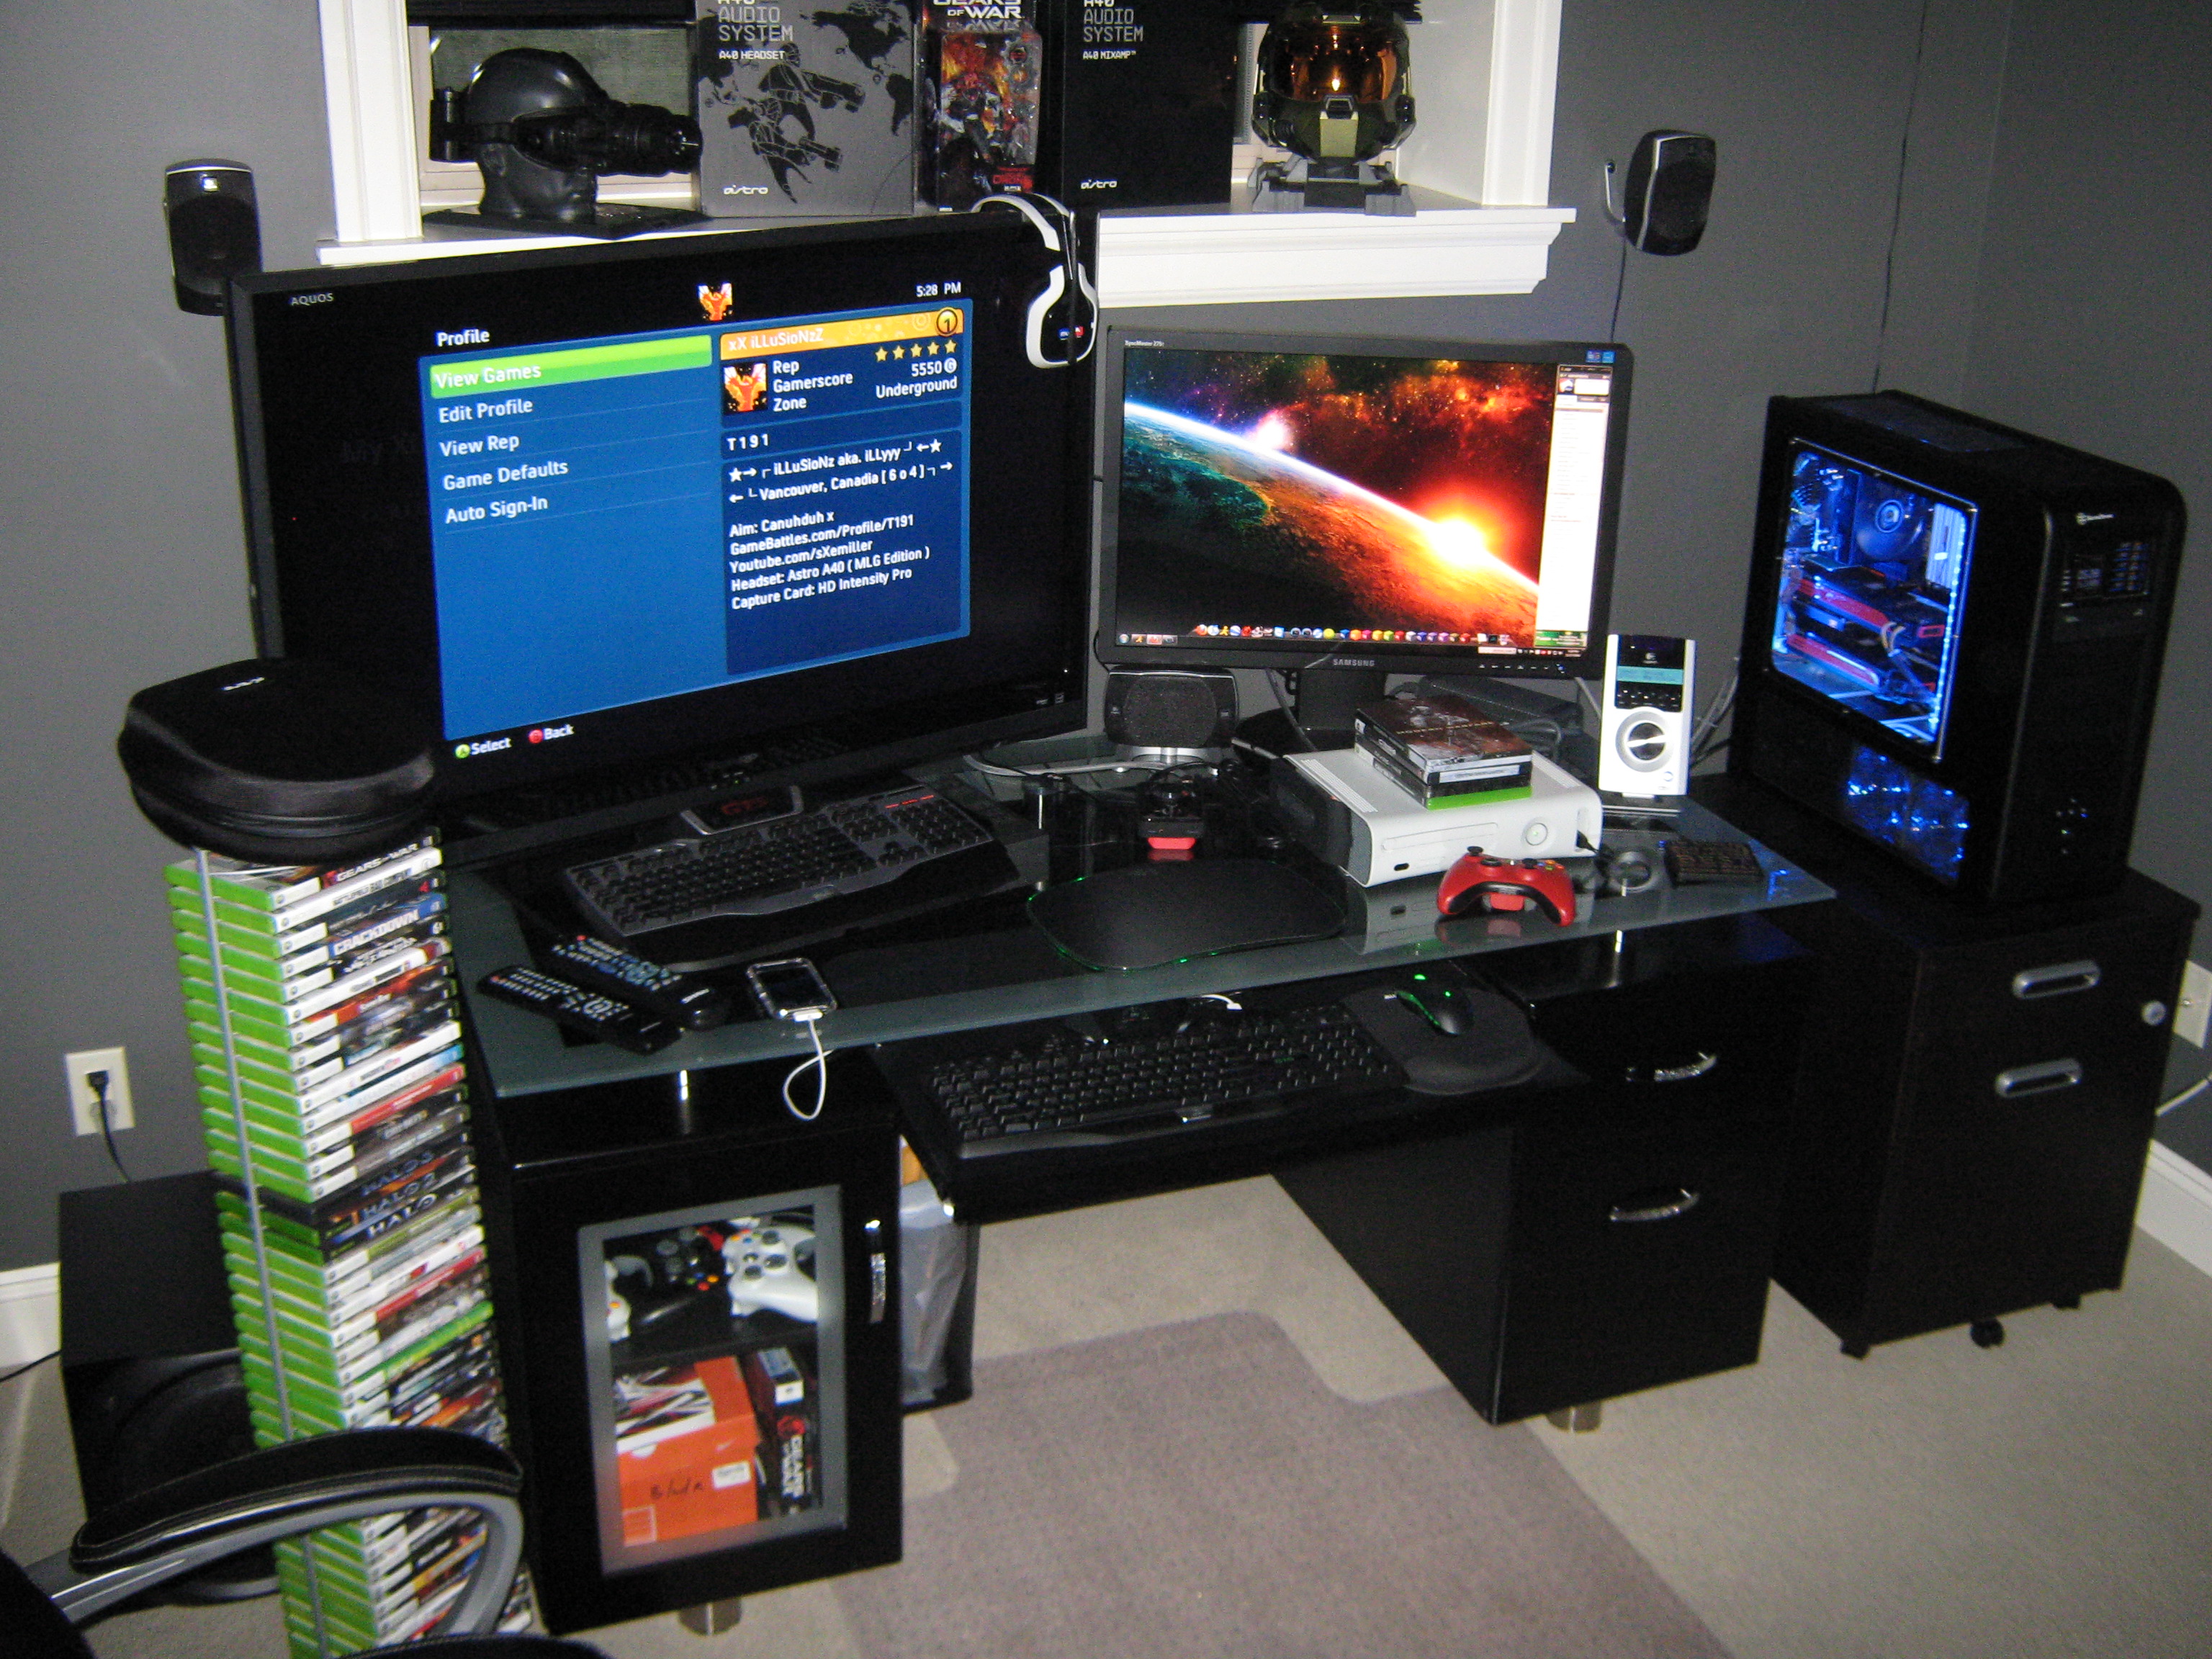 gaming setup wallpaper,computer desk,technology,electronic device,gadget,desk